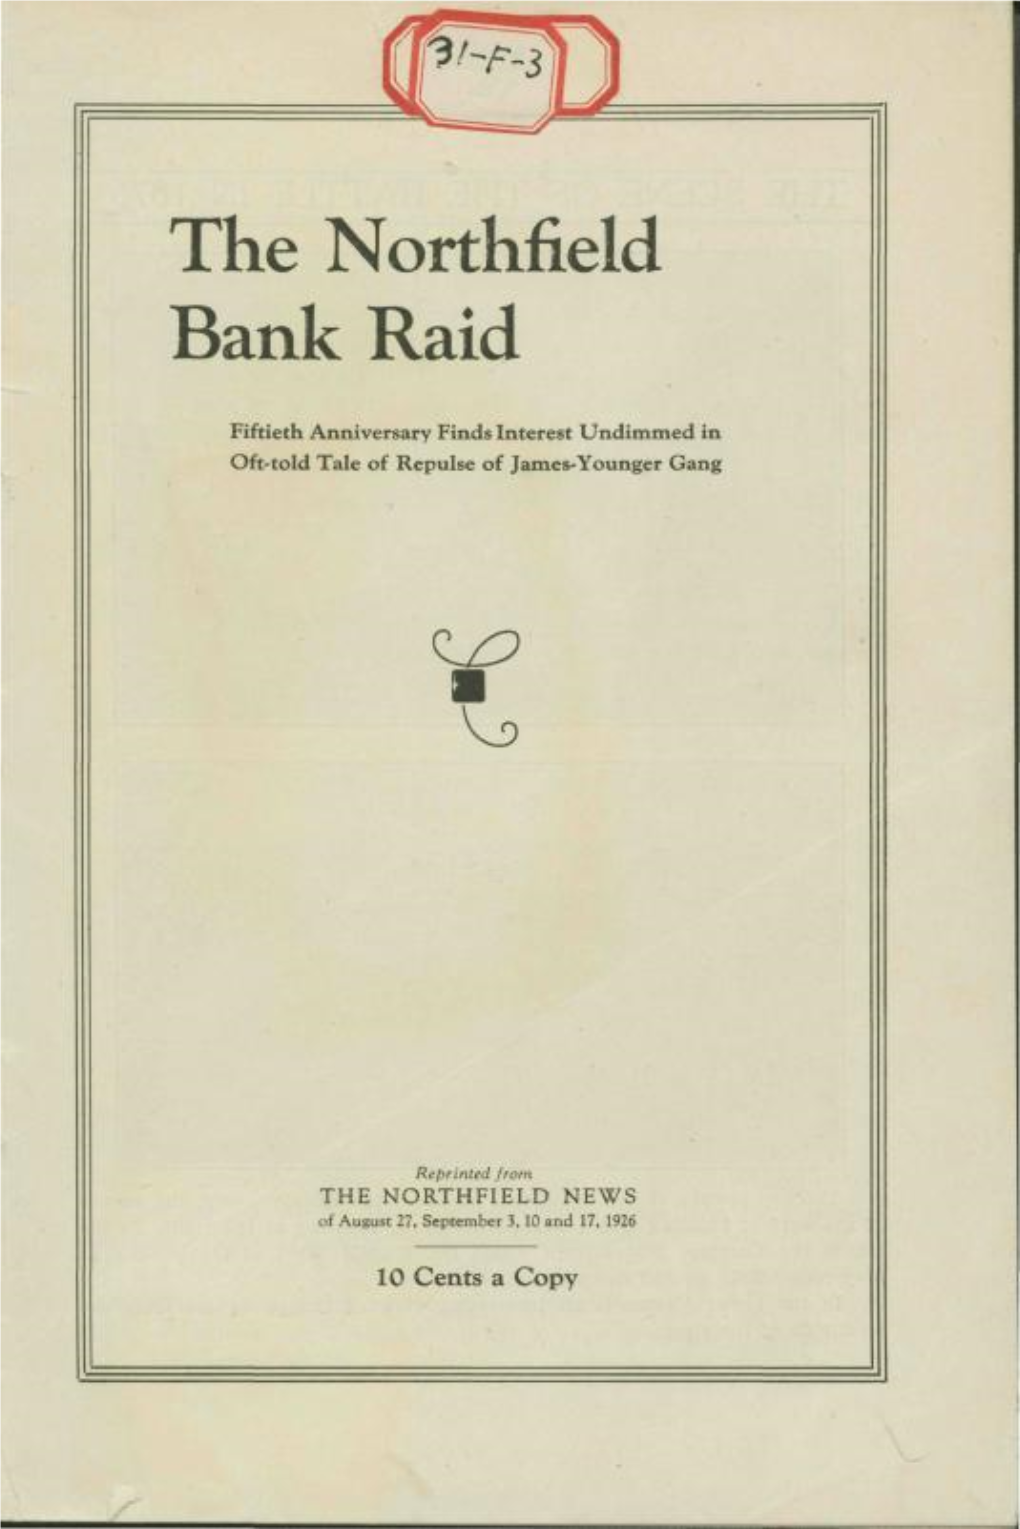 The Northfield Bank Raid